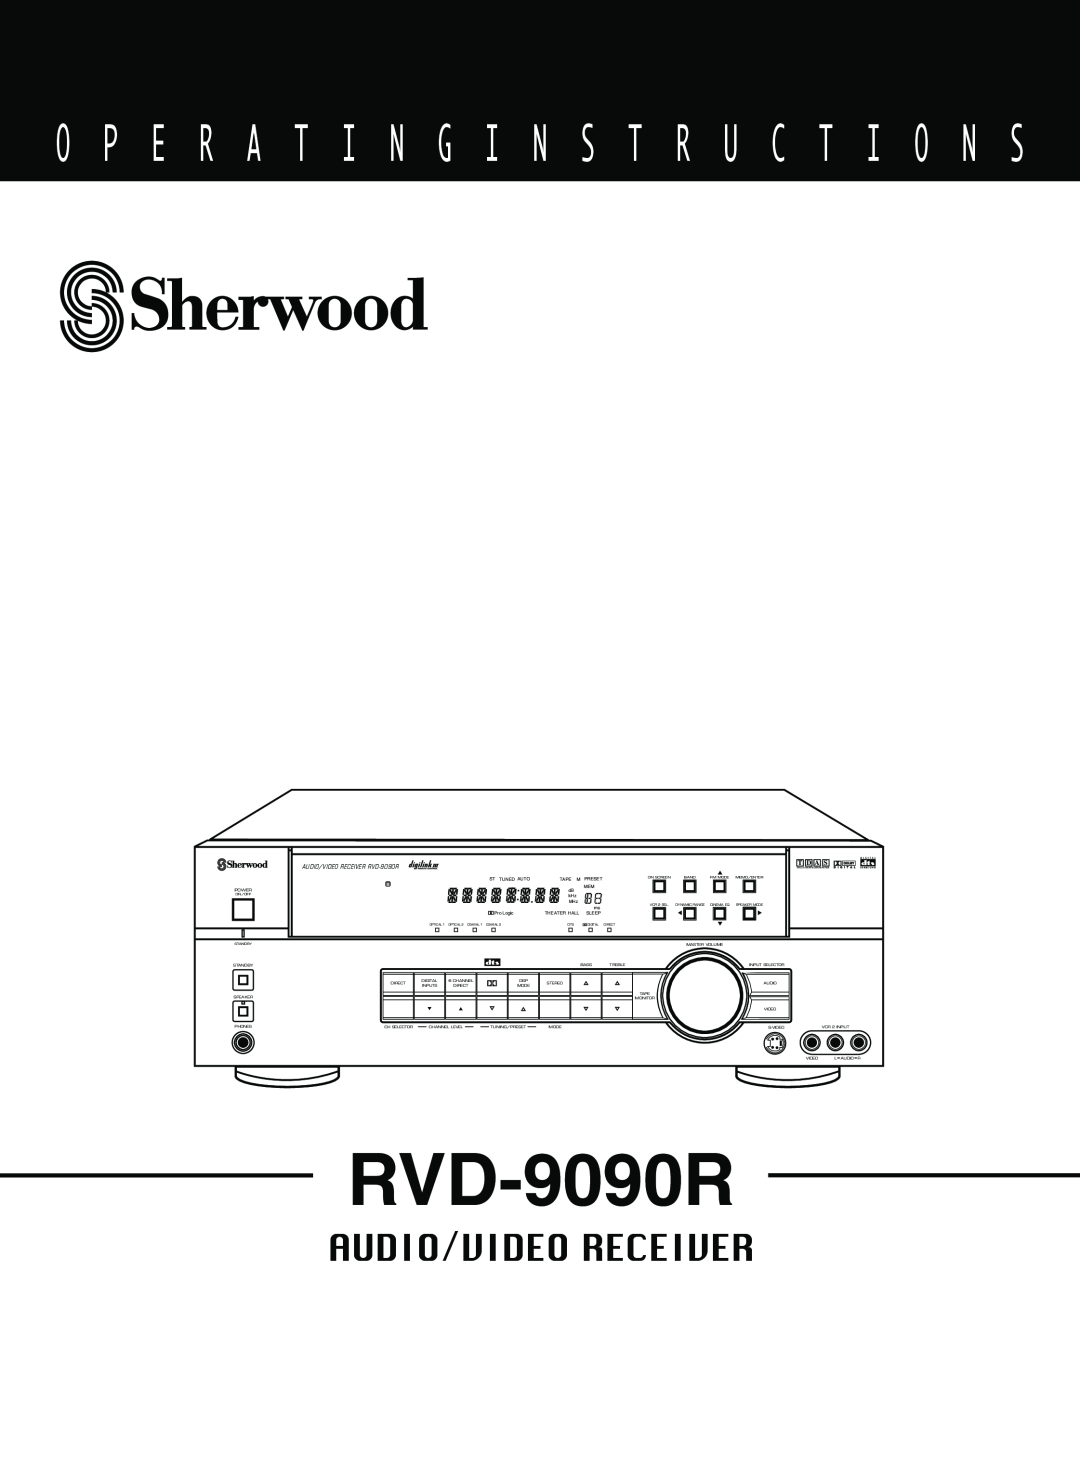 Sherwood RVD-9090R operating instructions O P E R A T I N G I N S T R U C T I O N S, Audio/Video Receiver, T D A S 